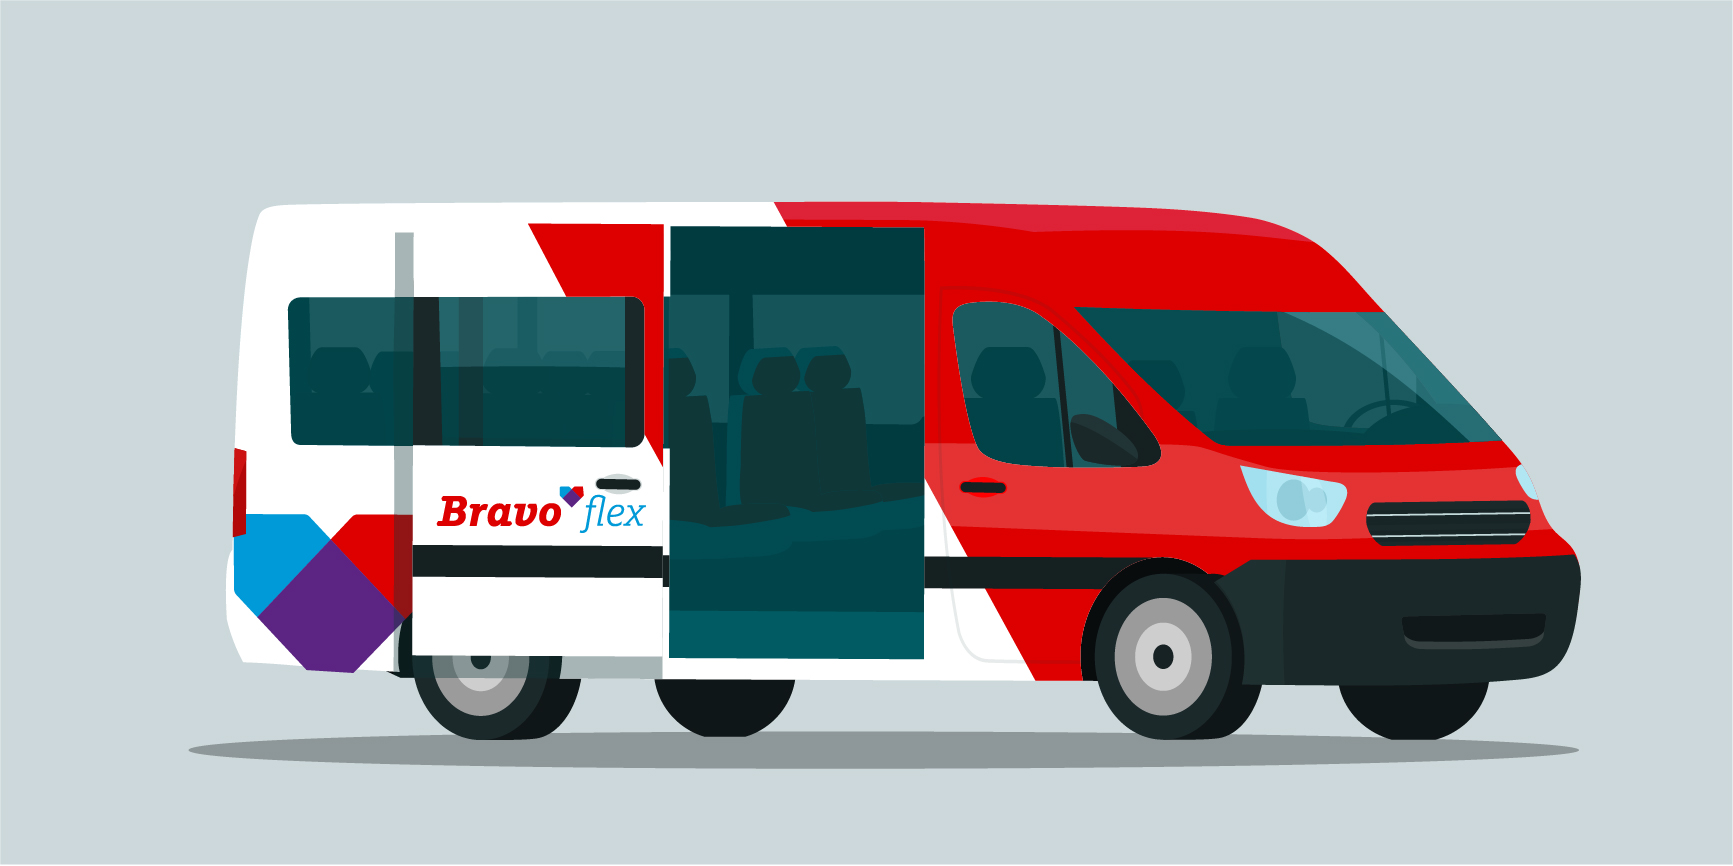 Bravo flex illustratie busje